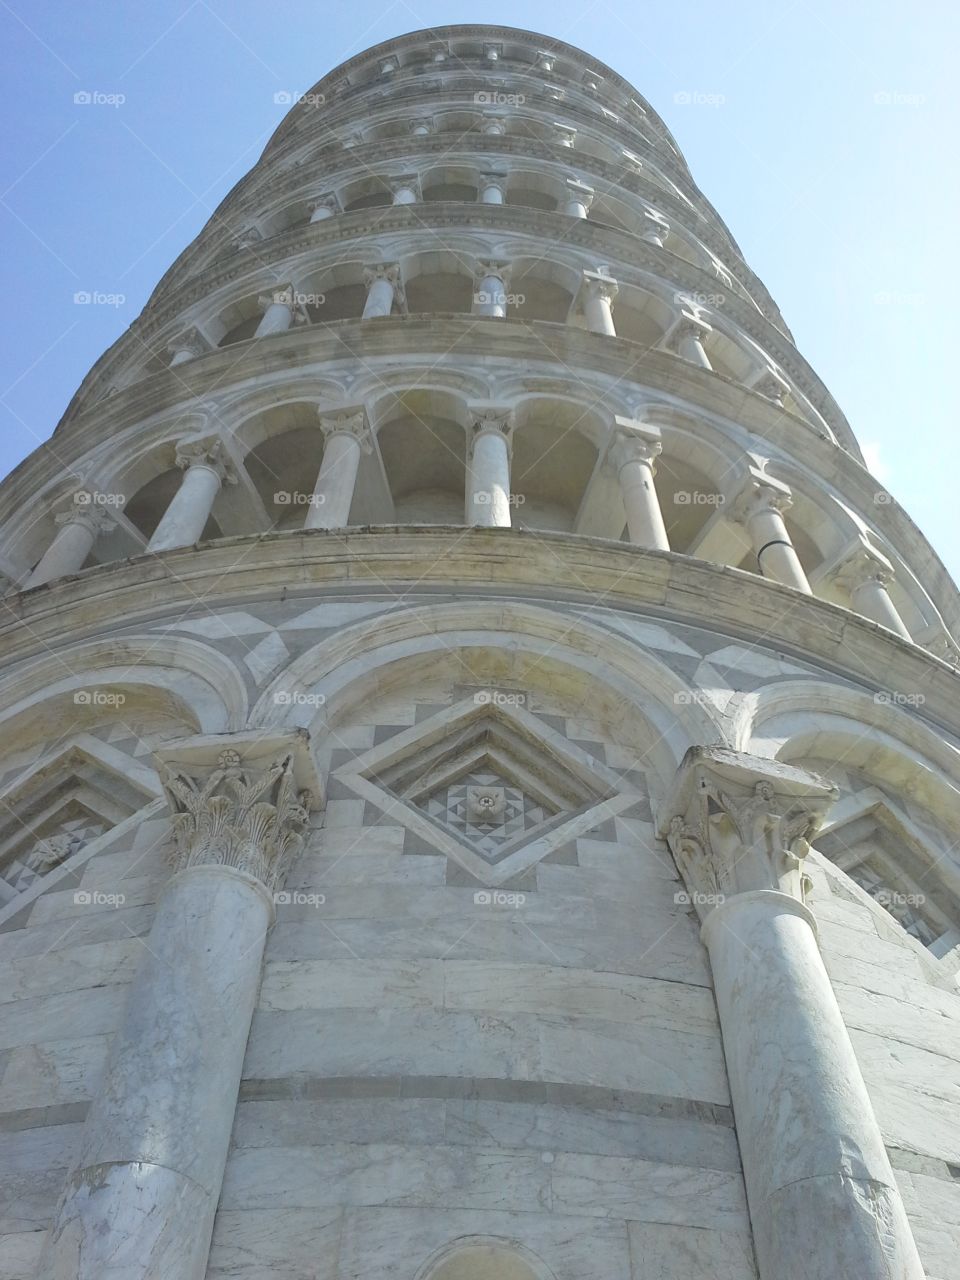 pisa. the tower